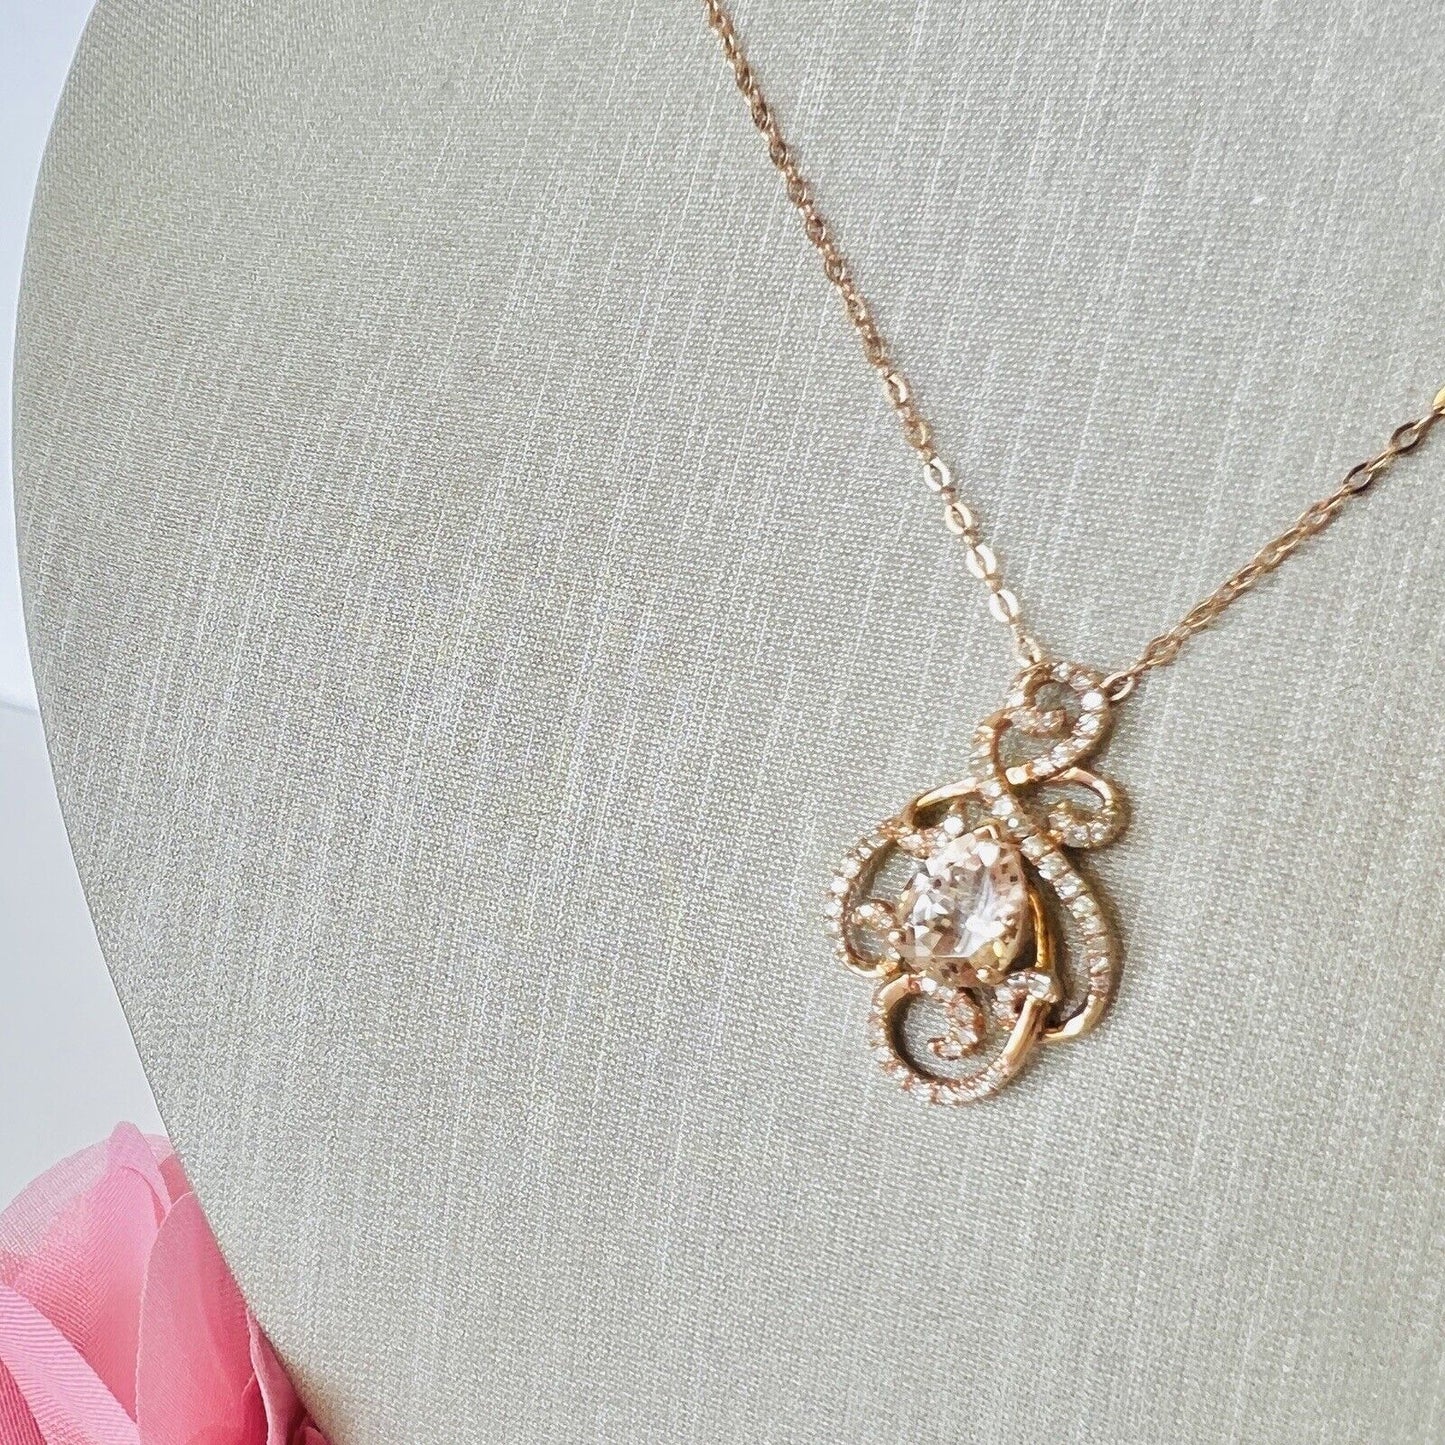 Solid 10k Rose Gold Genuine Morganite & Diamond Pendant/Necklace, New 17"